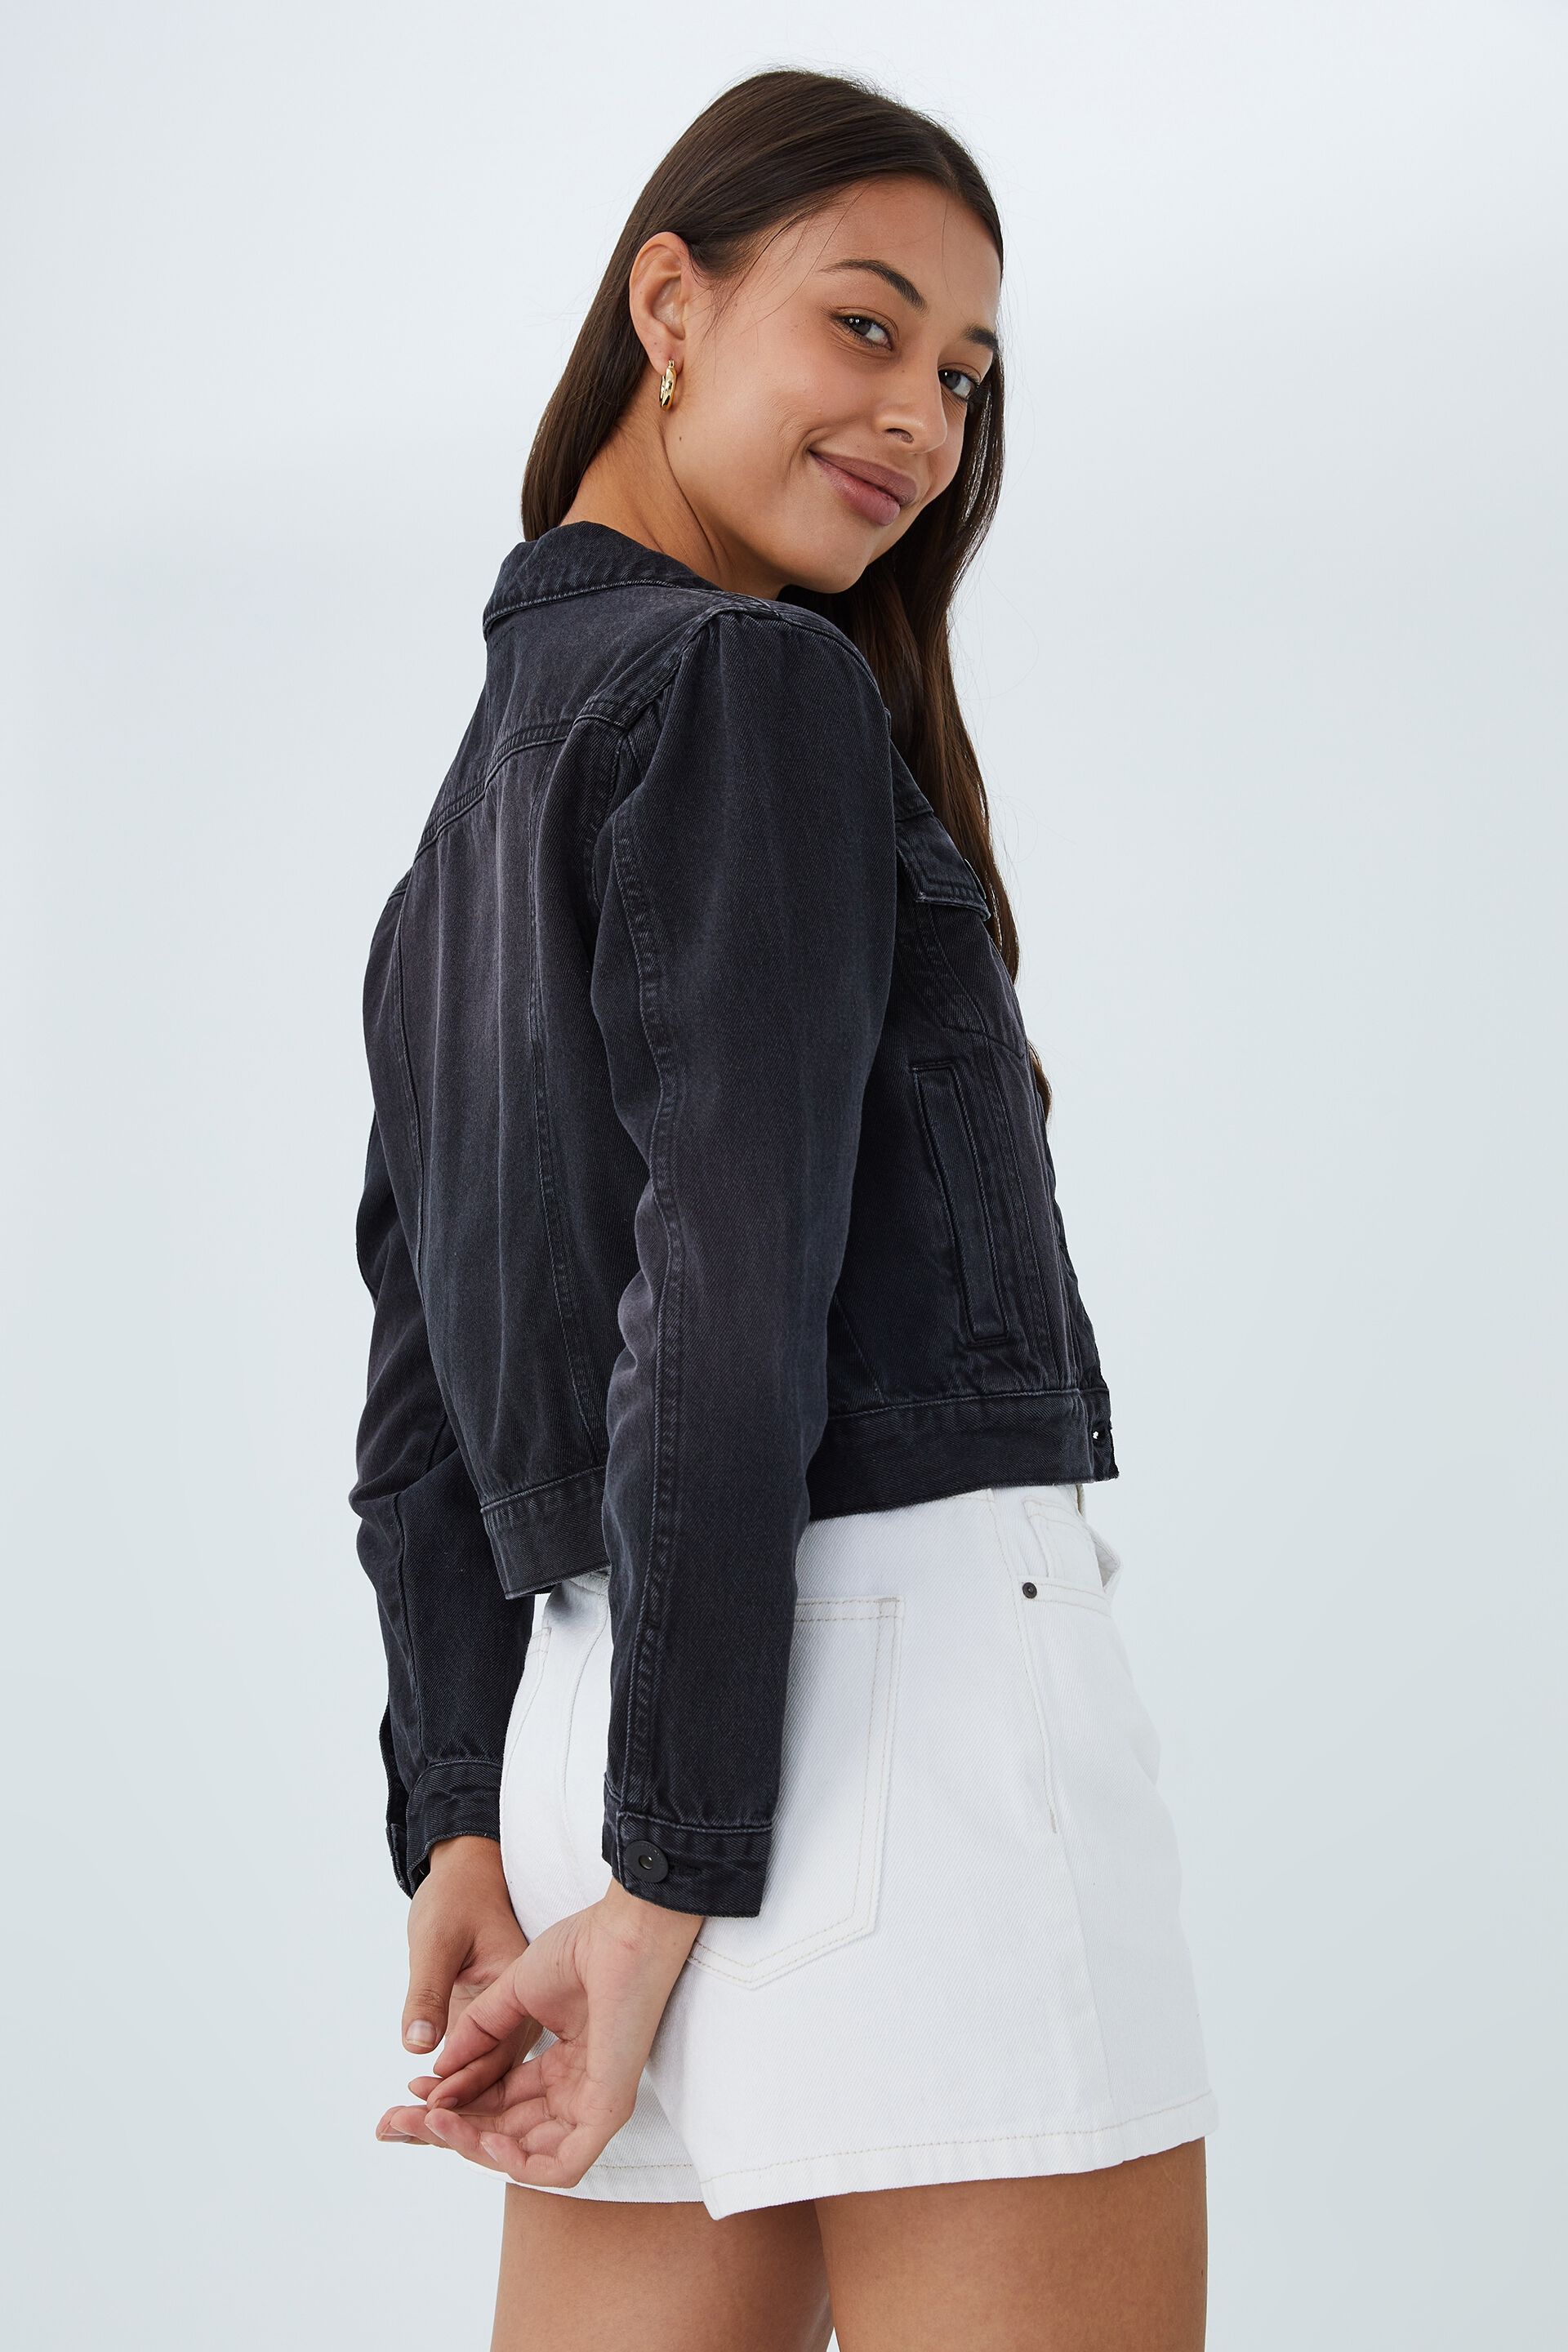 Womens Denim Jacket Black Acid Wash Jean Jackets Ladies Regular Size 6 - 20  | eBay